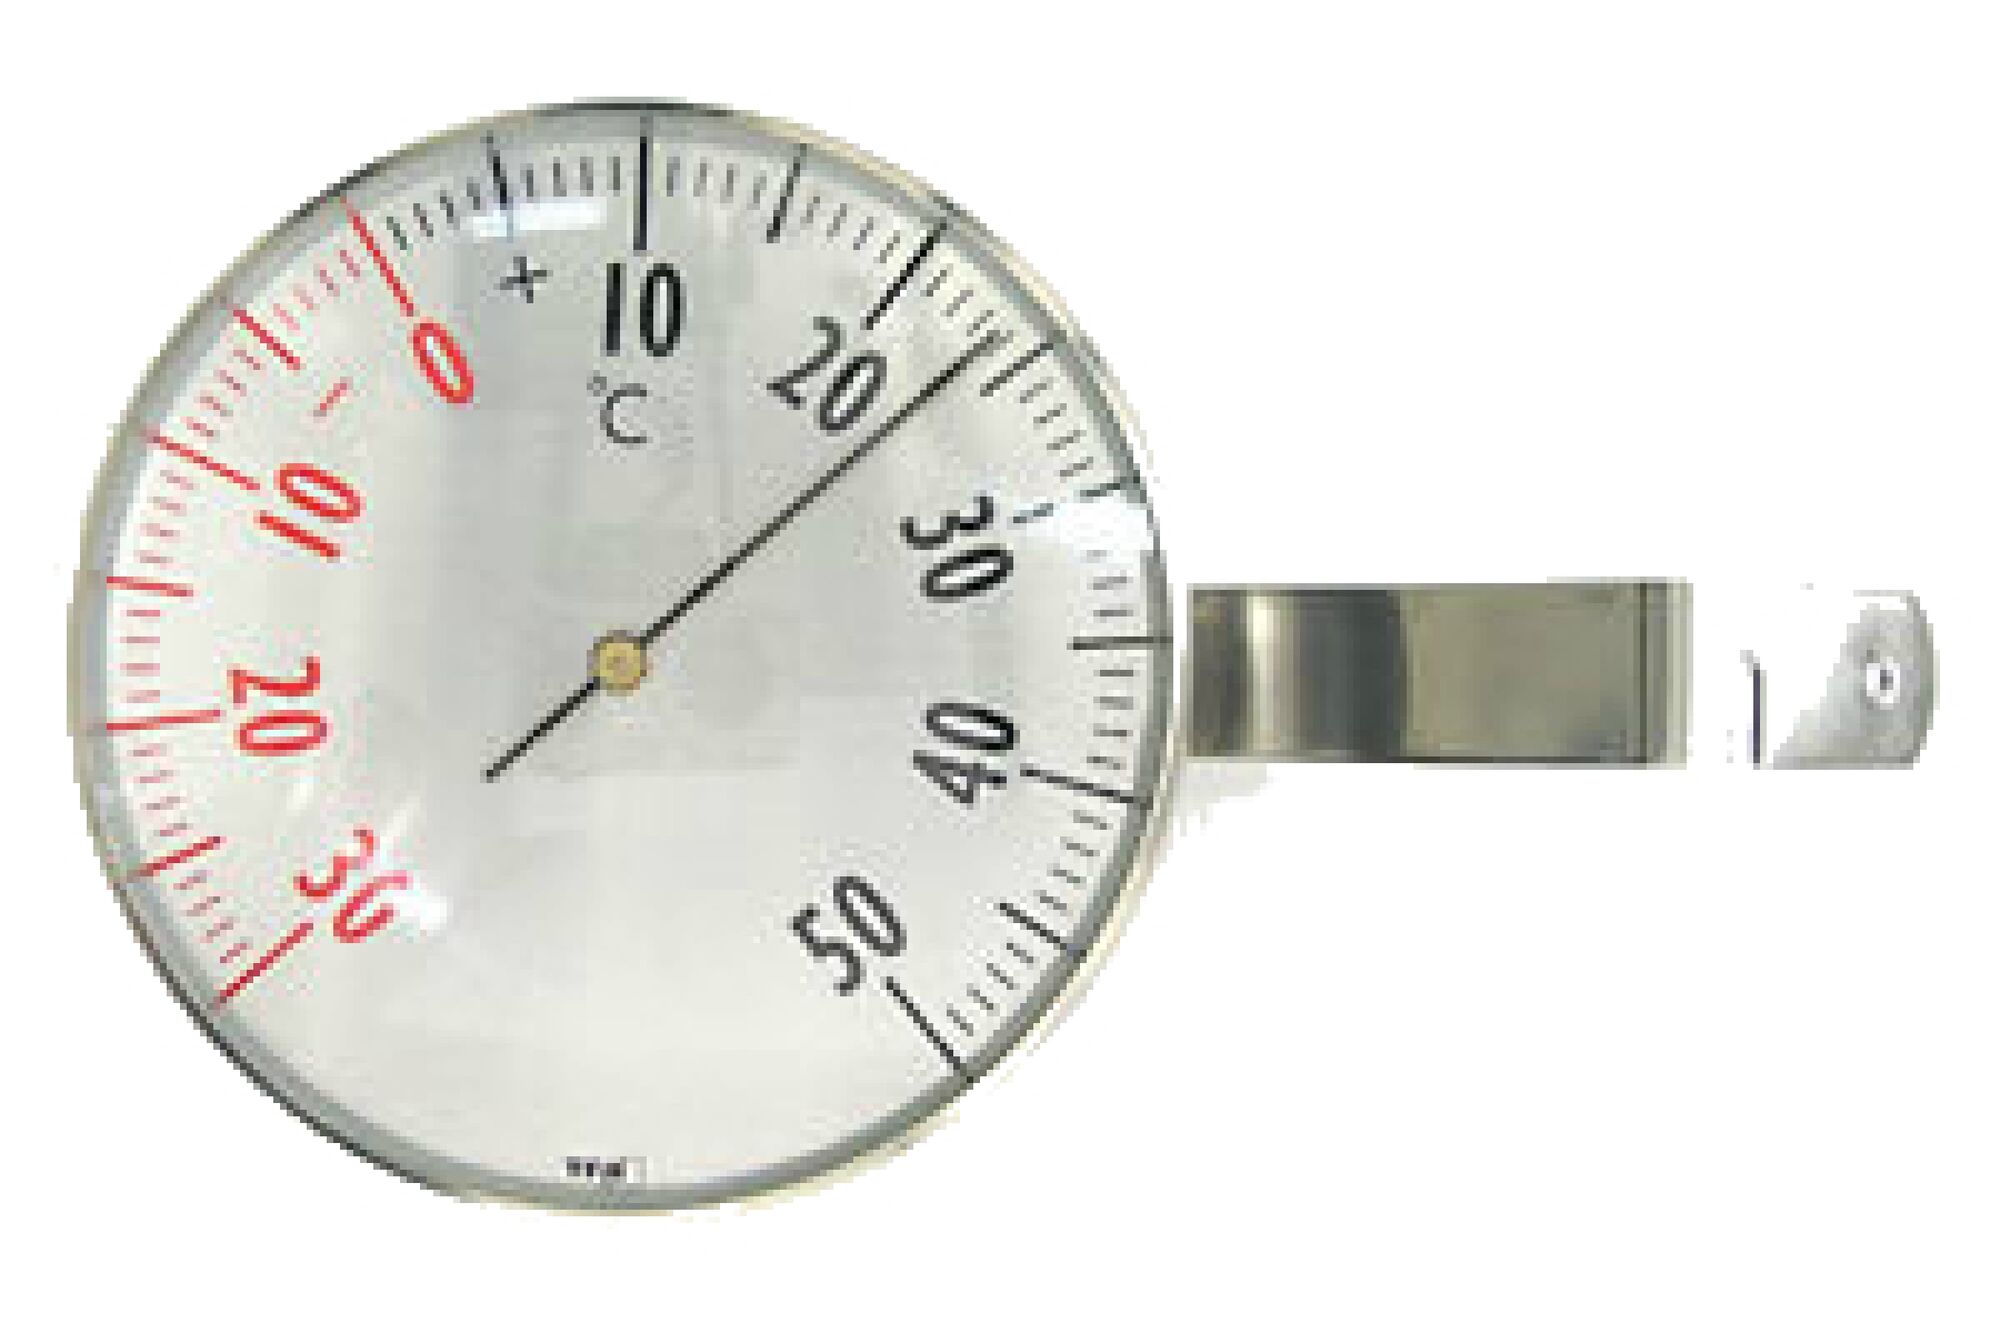 Оконный термометр TFA биметаллический 14.5003